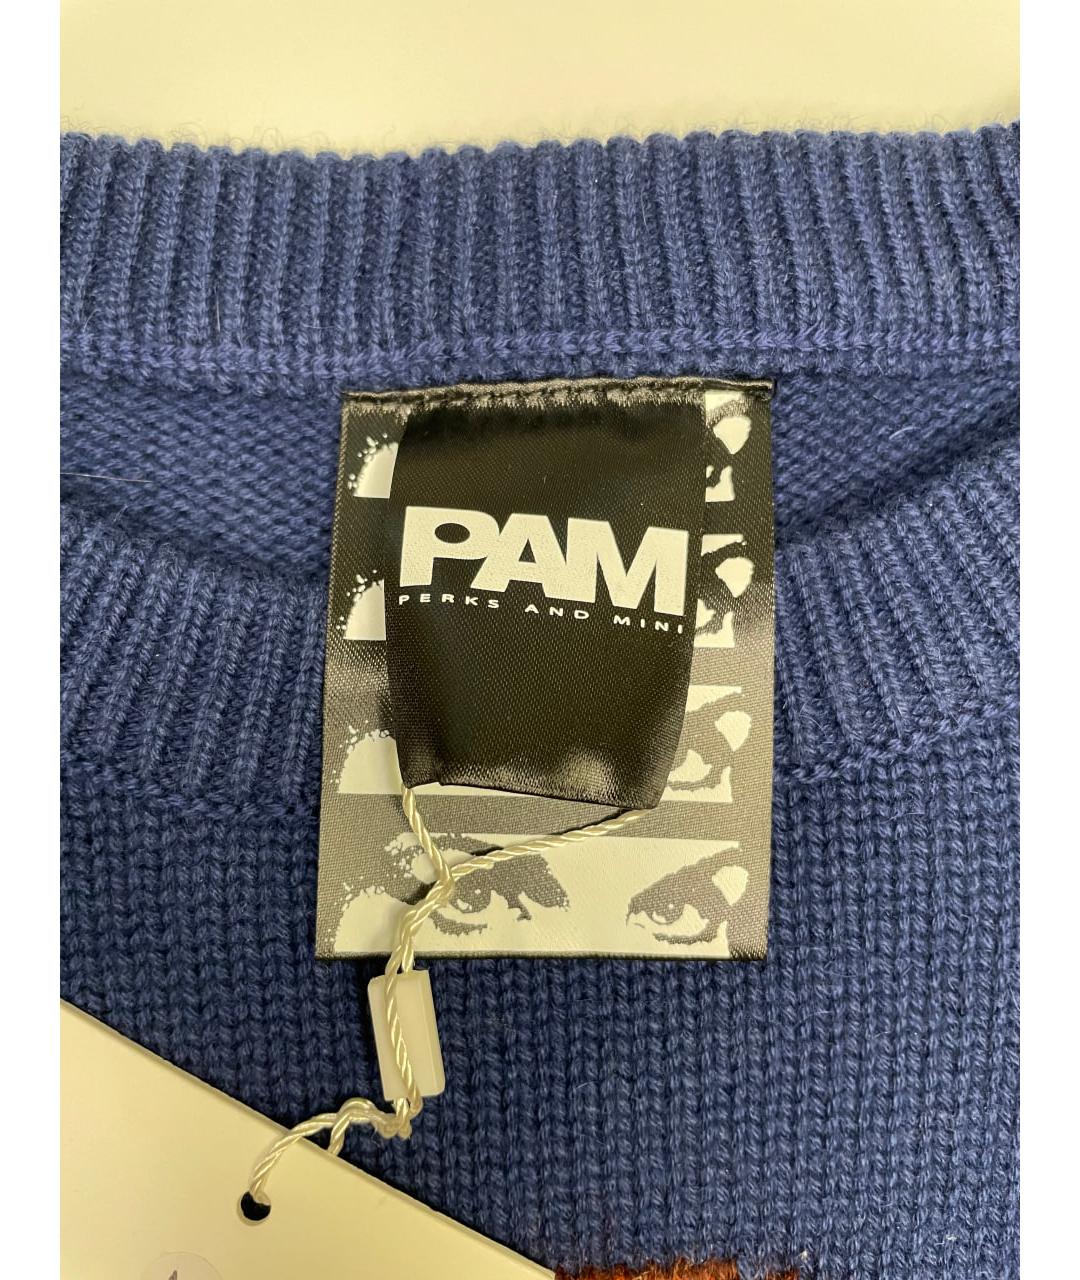 Perks and Mini Синий шерстяной джемпер / свитер, фото 3